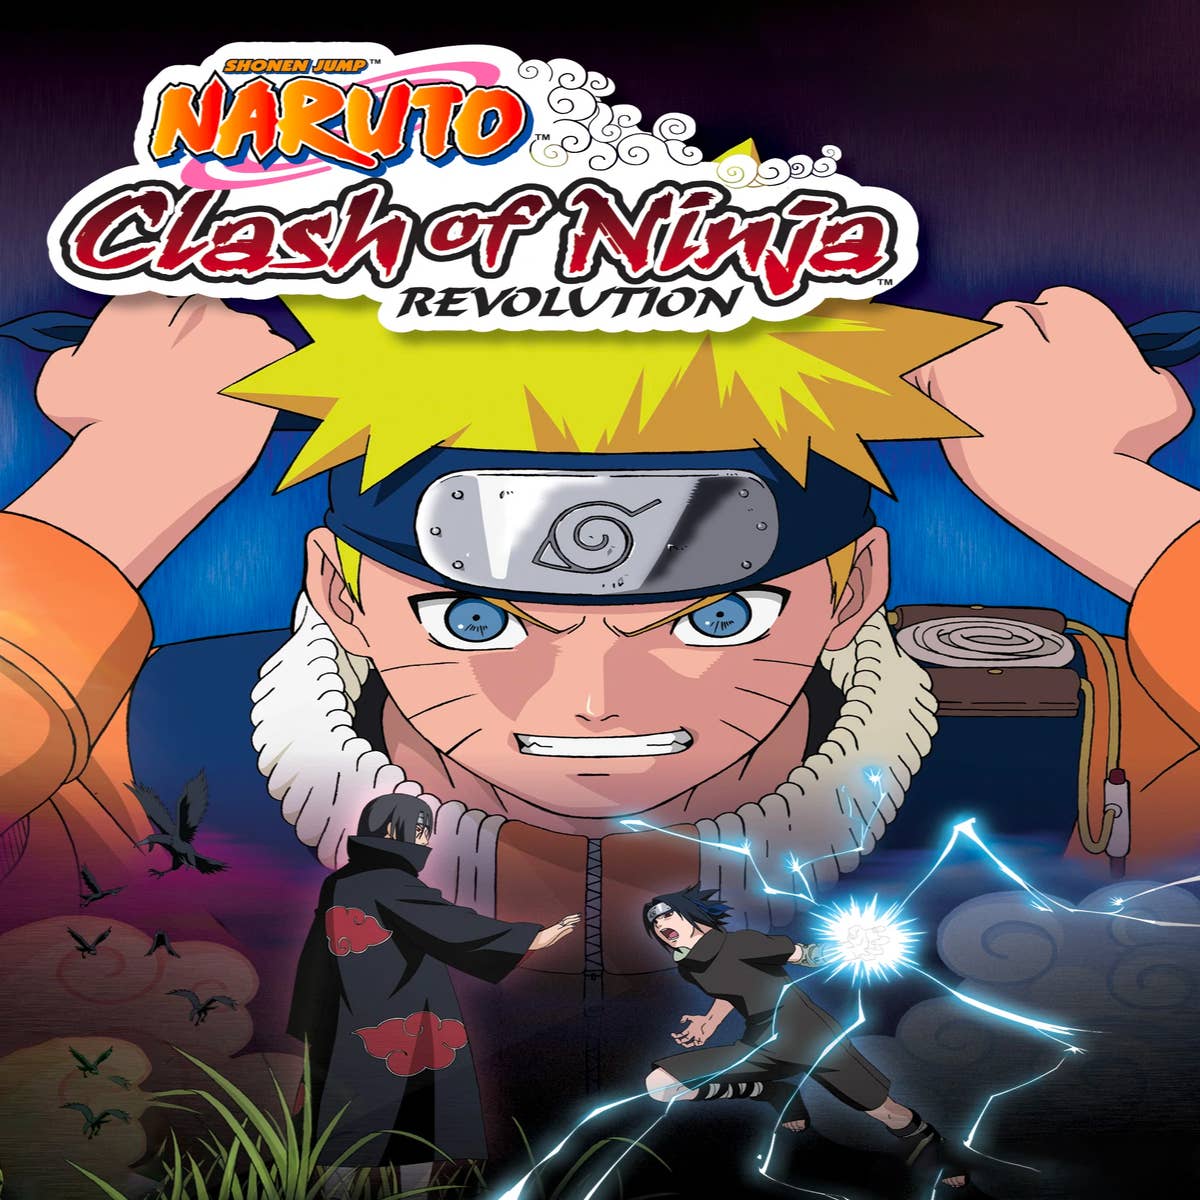 170mb] NARUTO Clash of Ninja Revolution 3 Highly Compressed